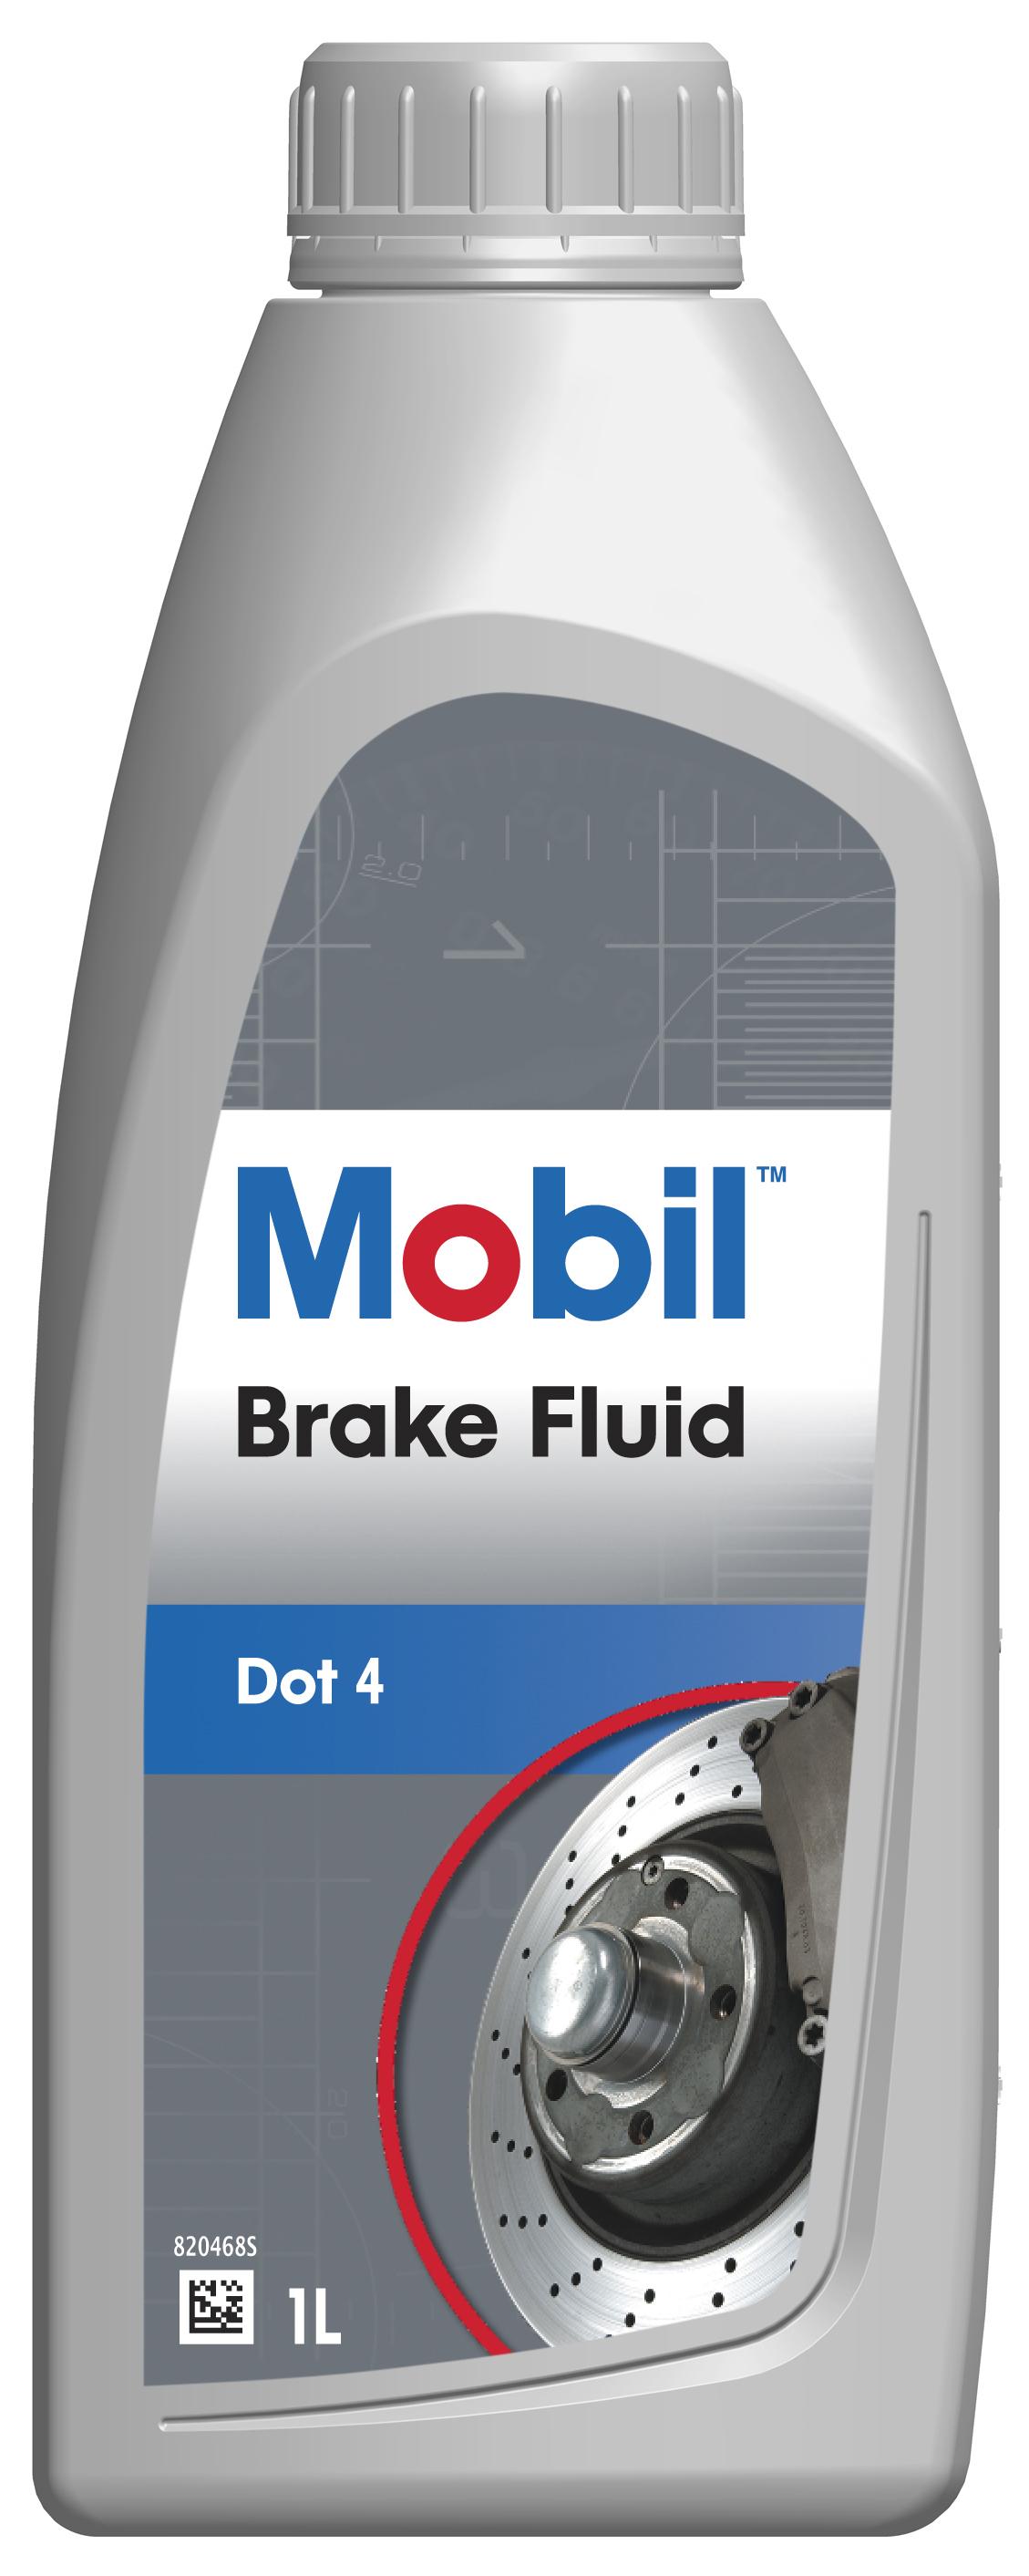 Mobil Brake Fluid Dot 4 Sc 1L